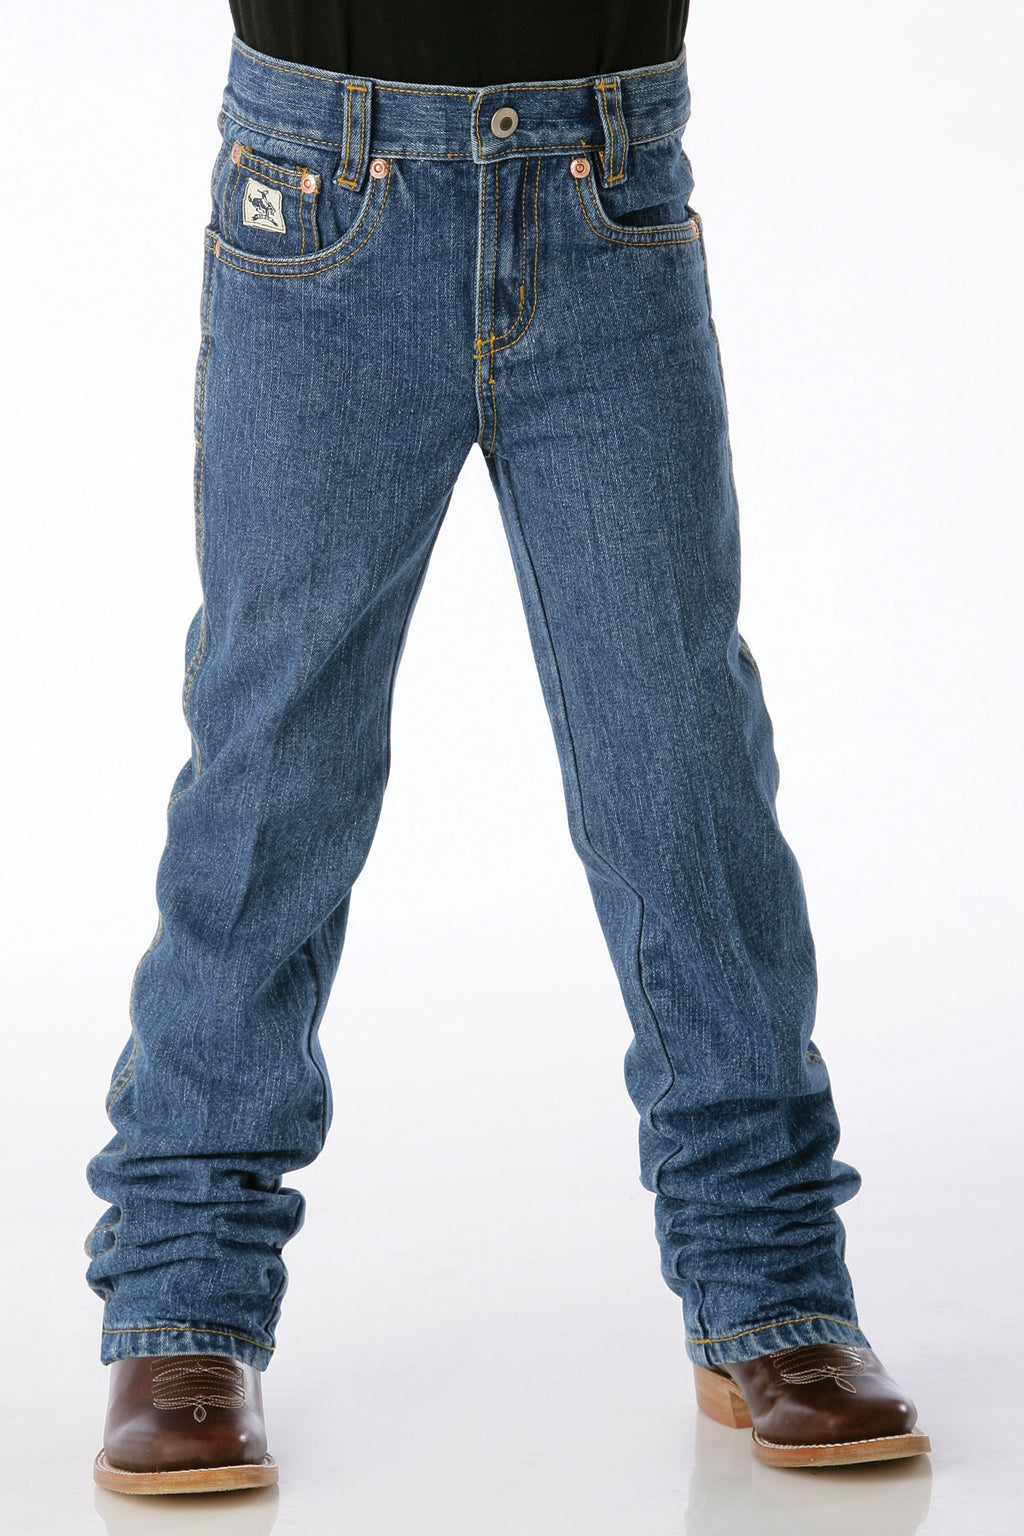 CINCH Boy's Original Medium Stone Jeans (Regular/Slim)